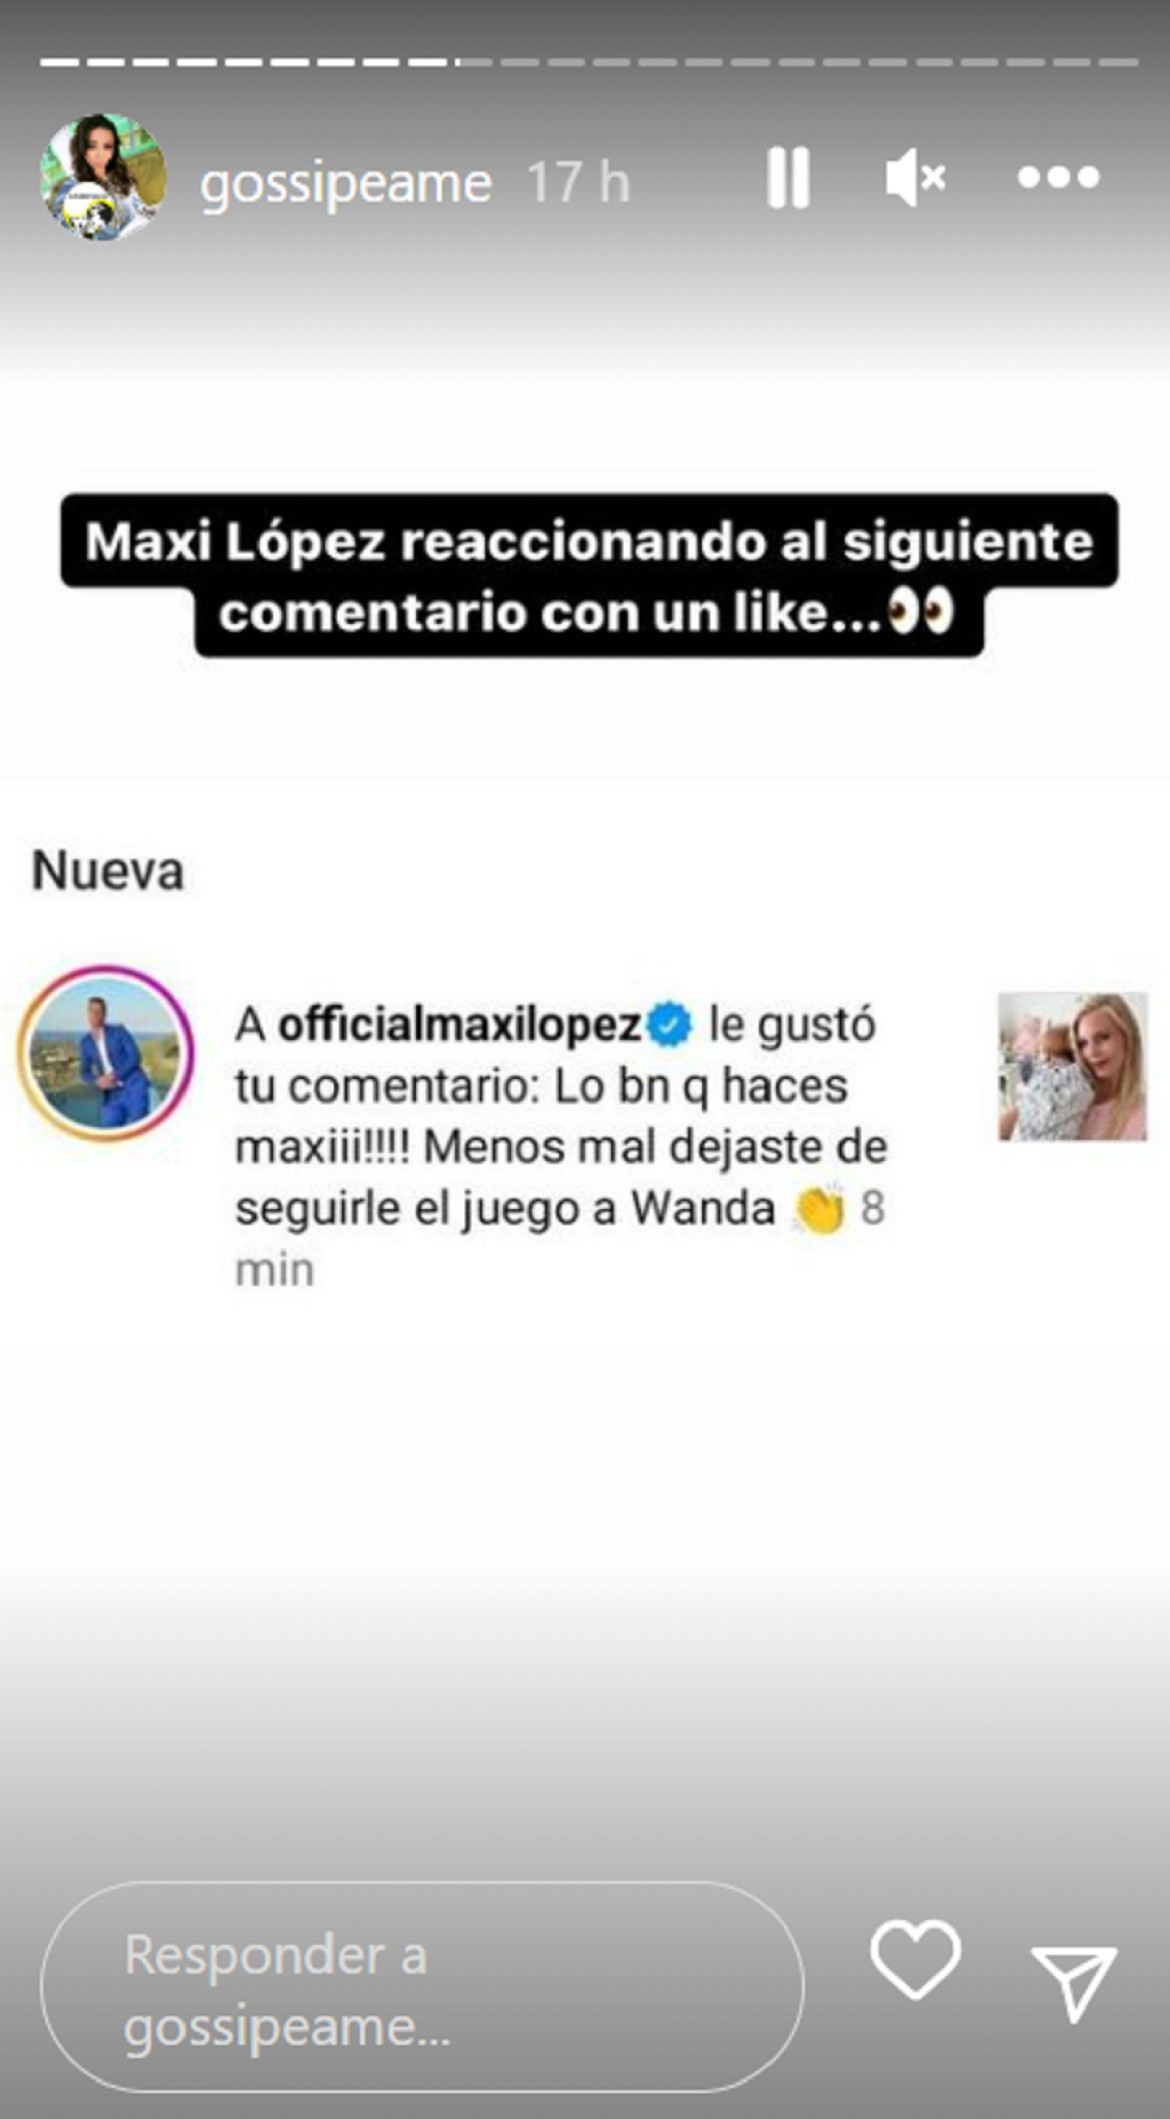 El polémico like de Maxi López. Foto: Instagram/gossipeame.